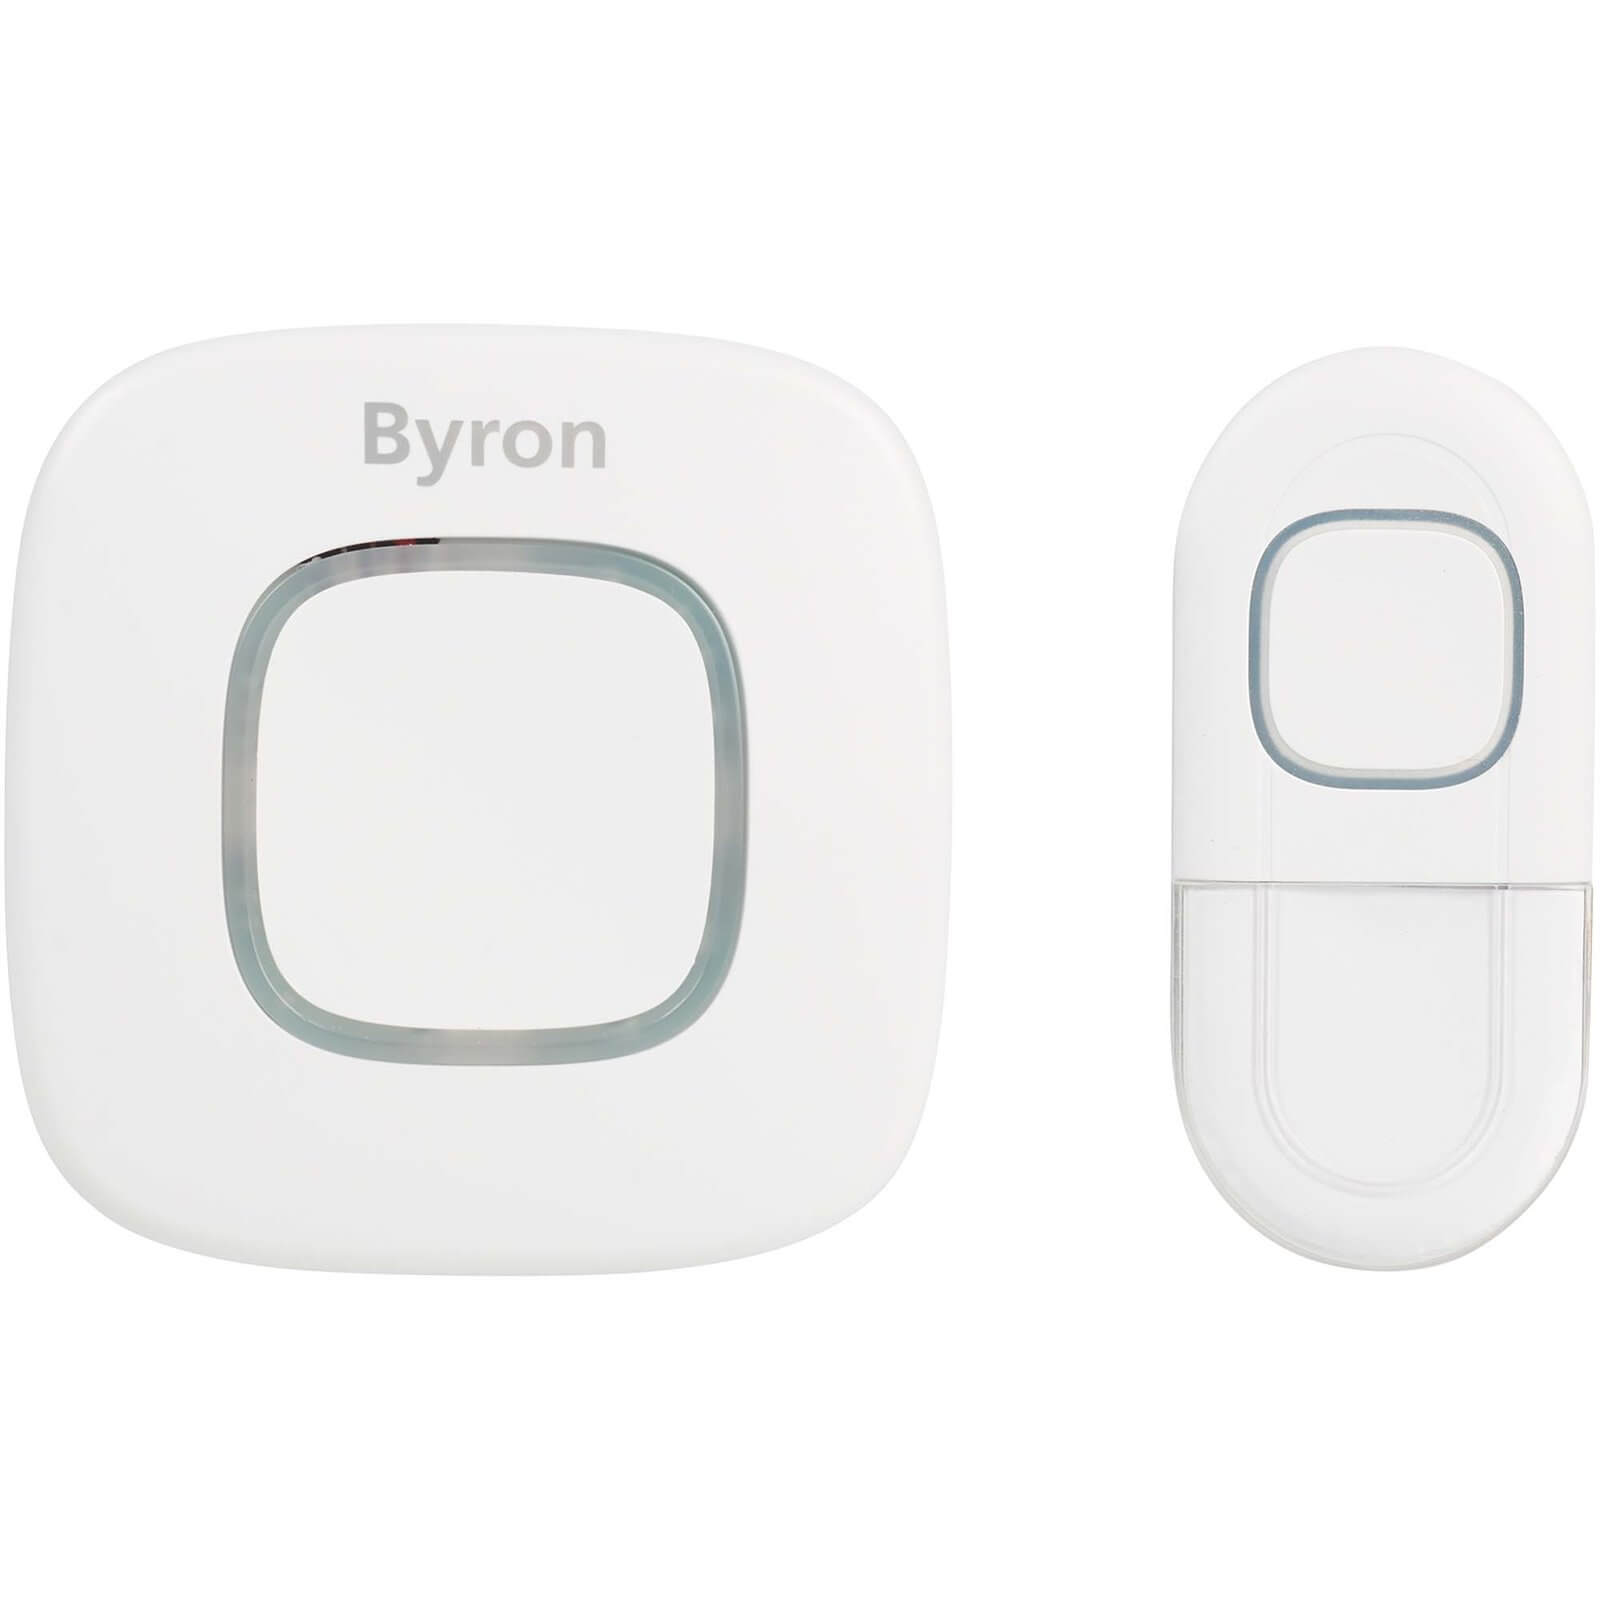 Byron 721 200m Portable Wireless Doorbell set